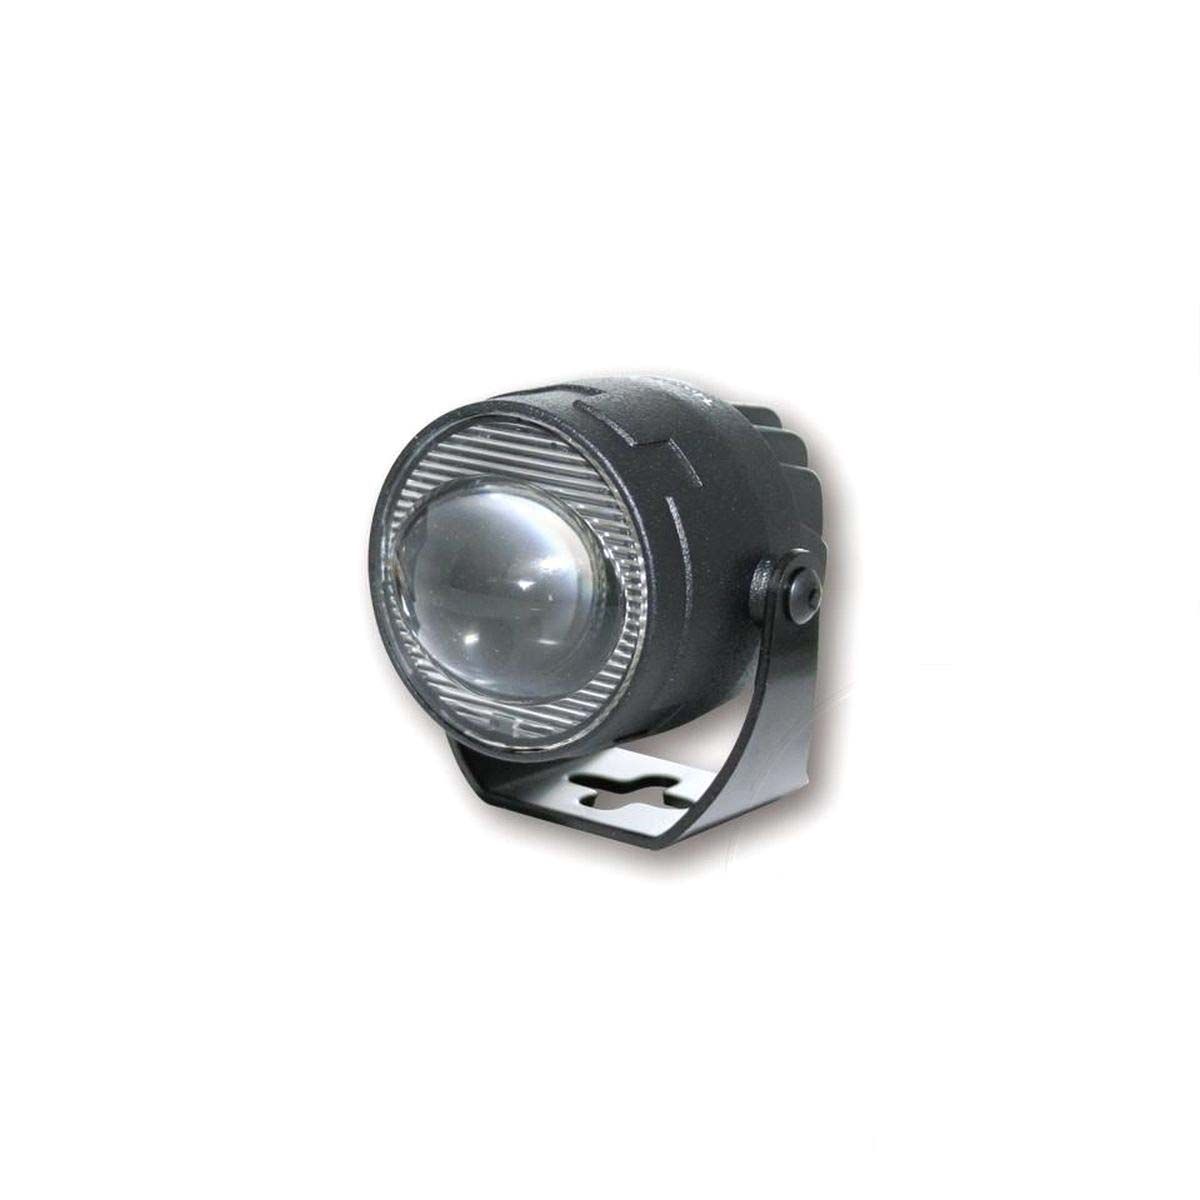 HIGHSIDER ULTIMATE LED spotlight with Z holder